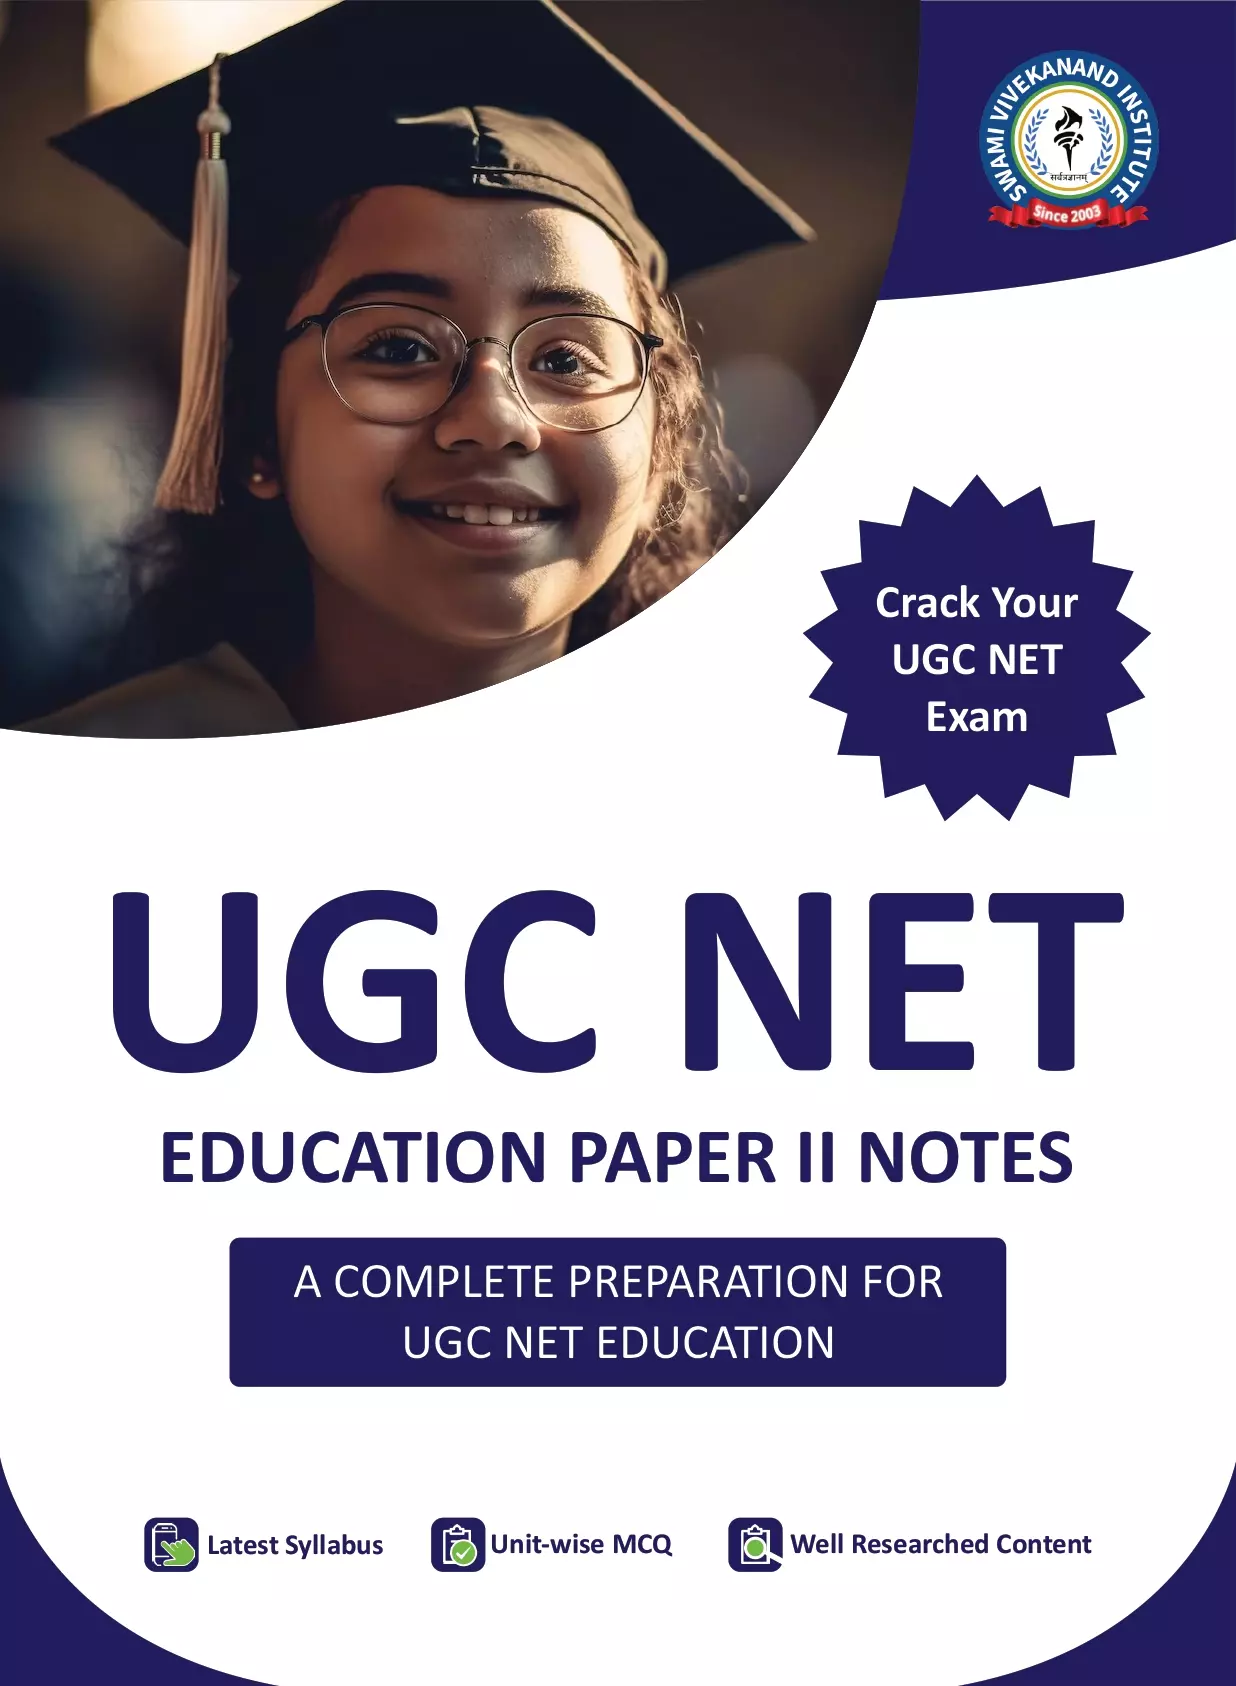 UGC NET EDUCATION PAPER 2 NOTES